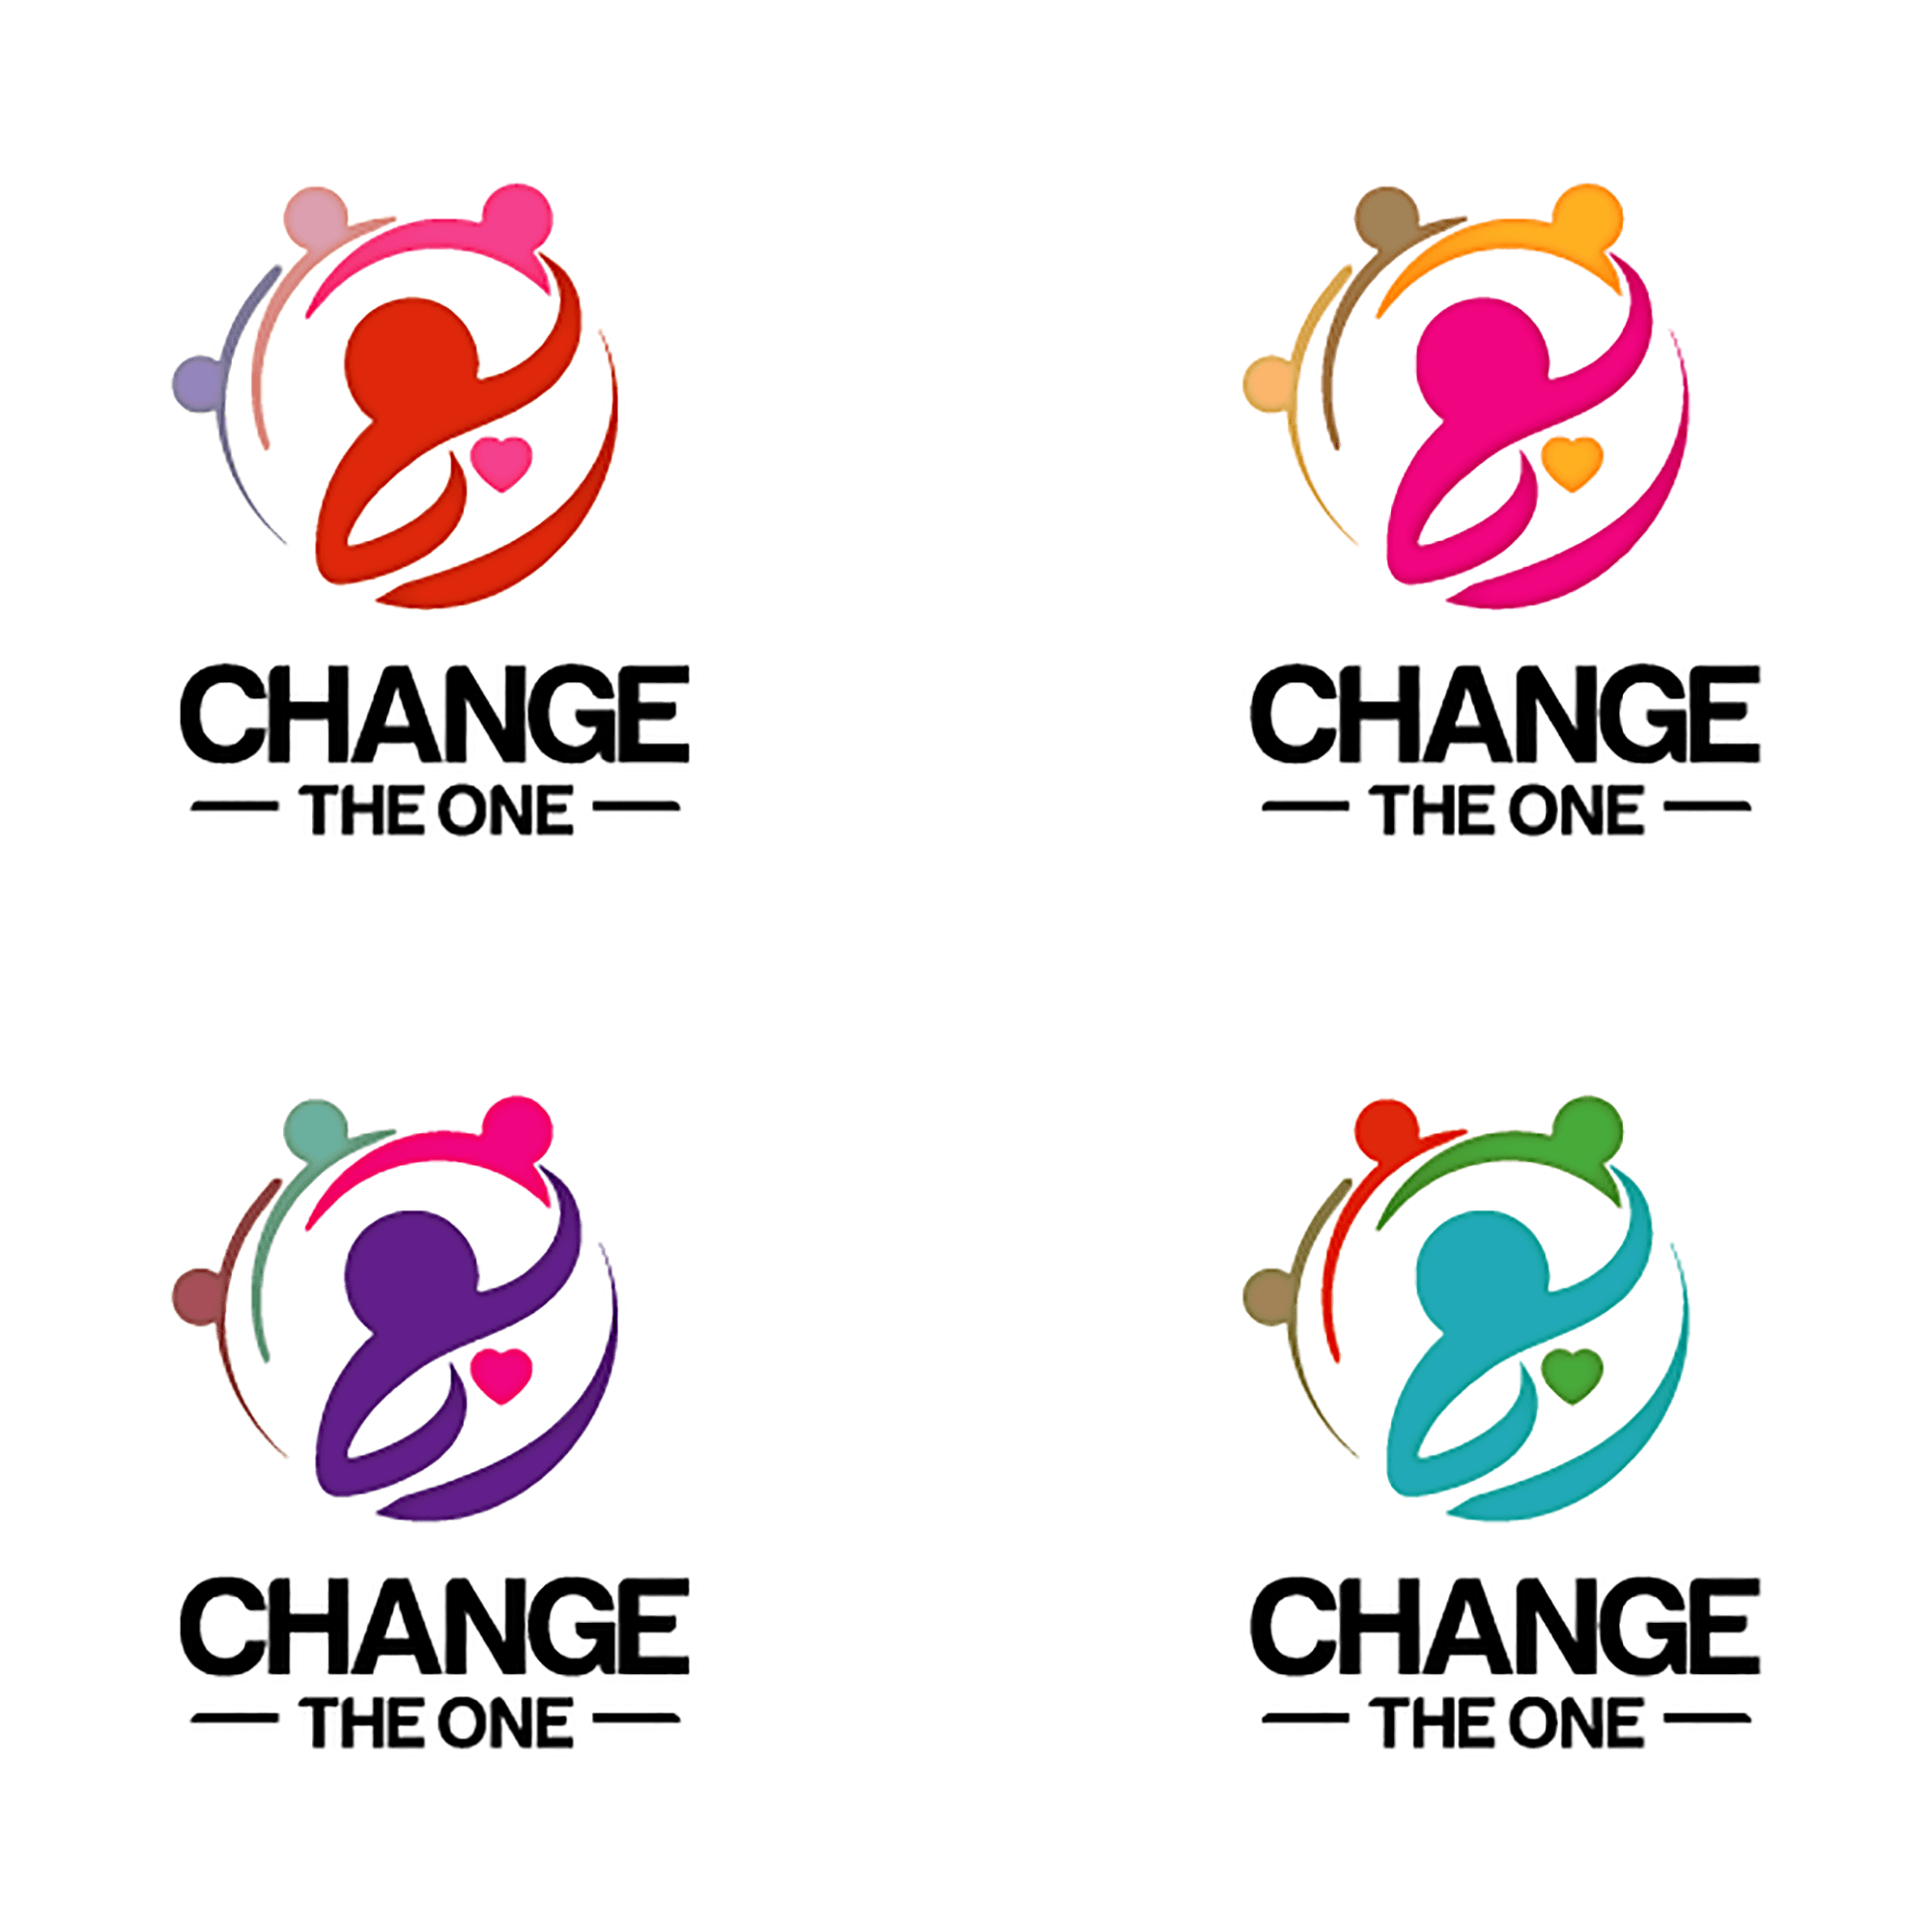 Organization Logo - Missing Charity Organization Logo Design Elements